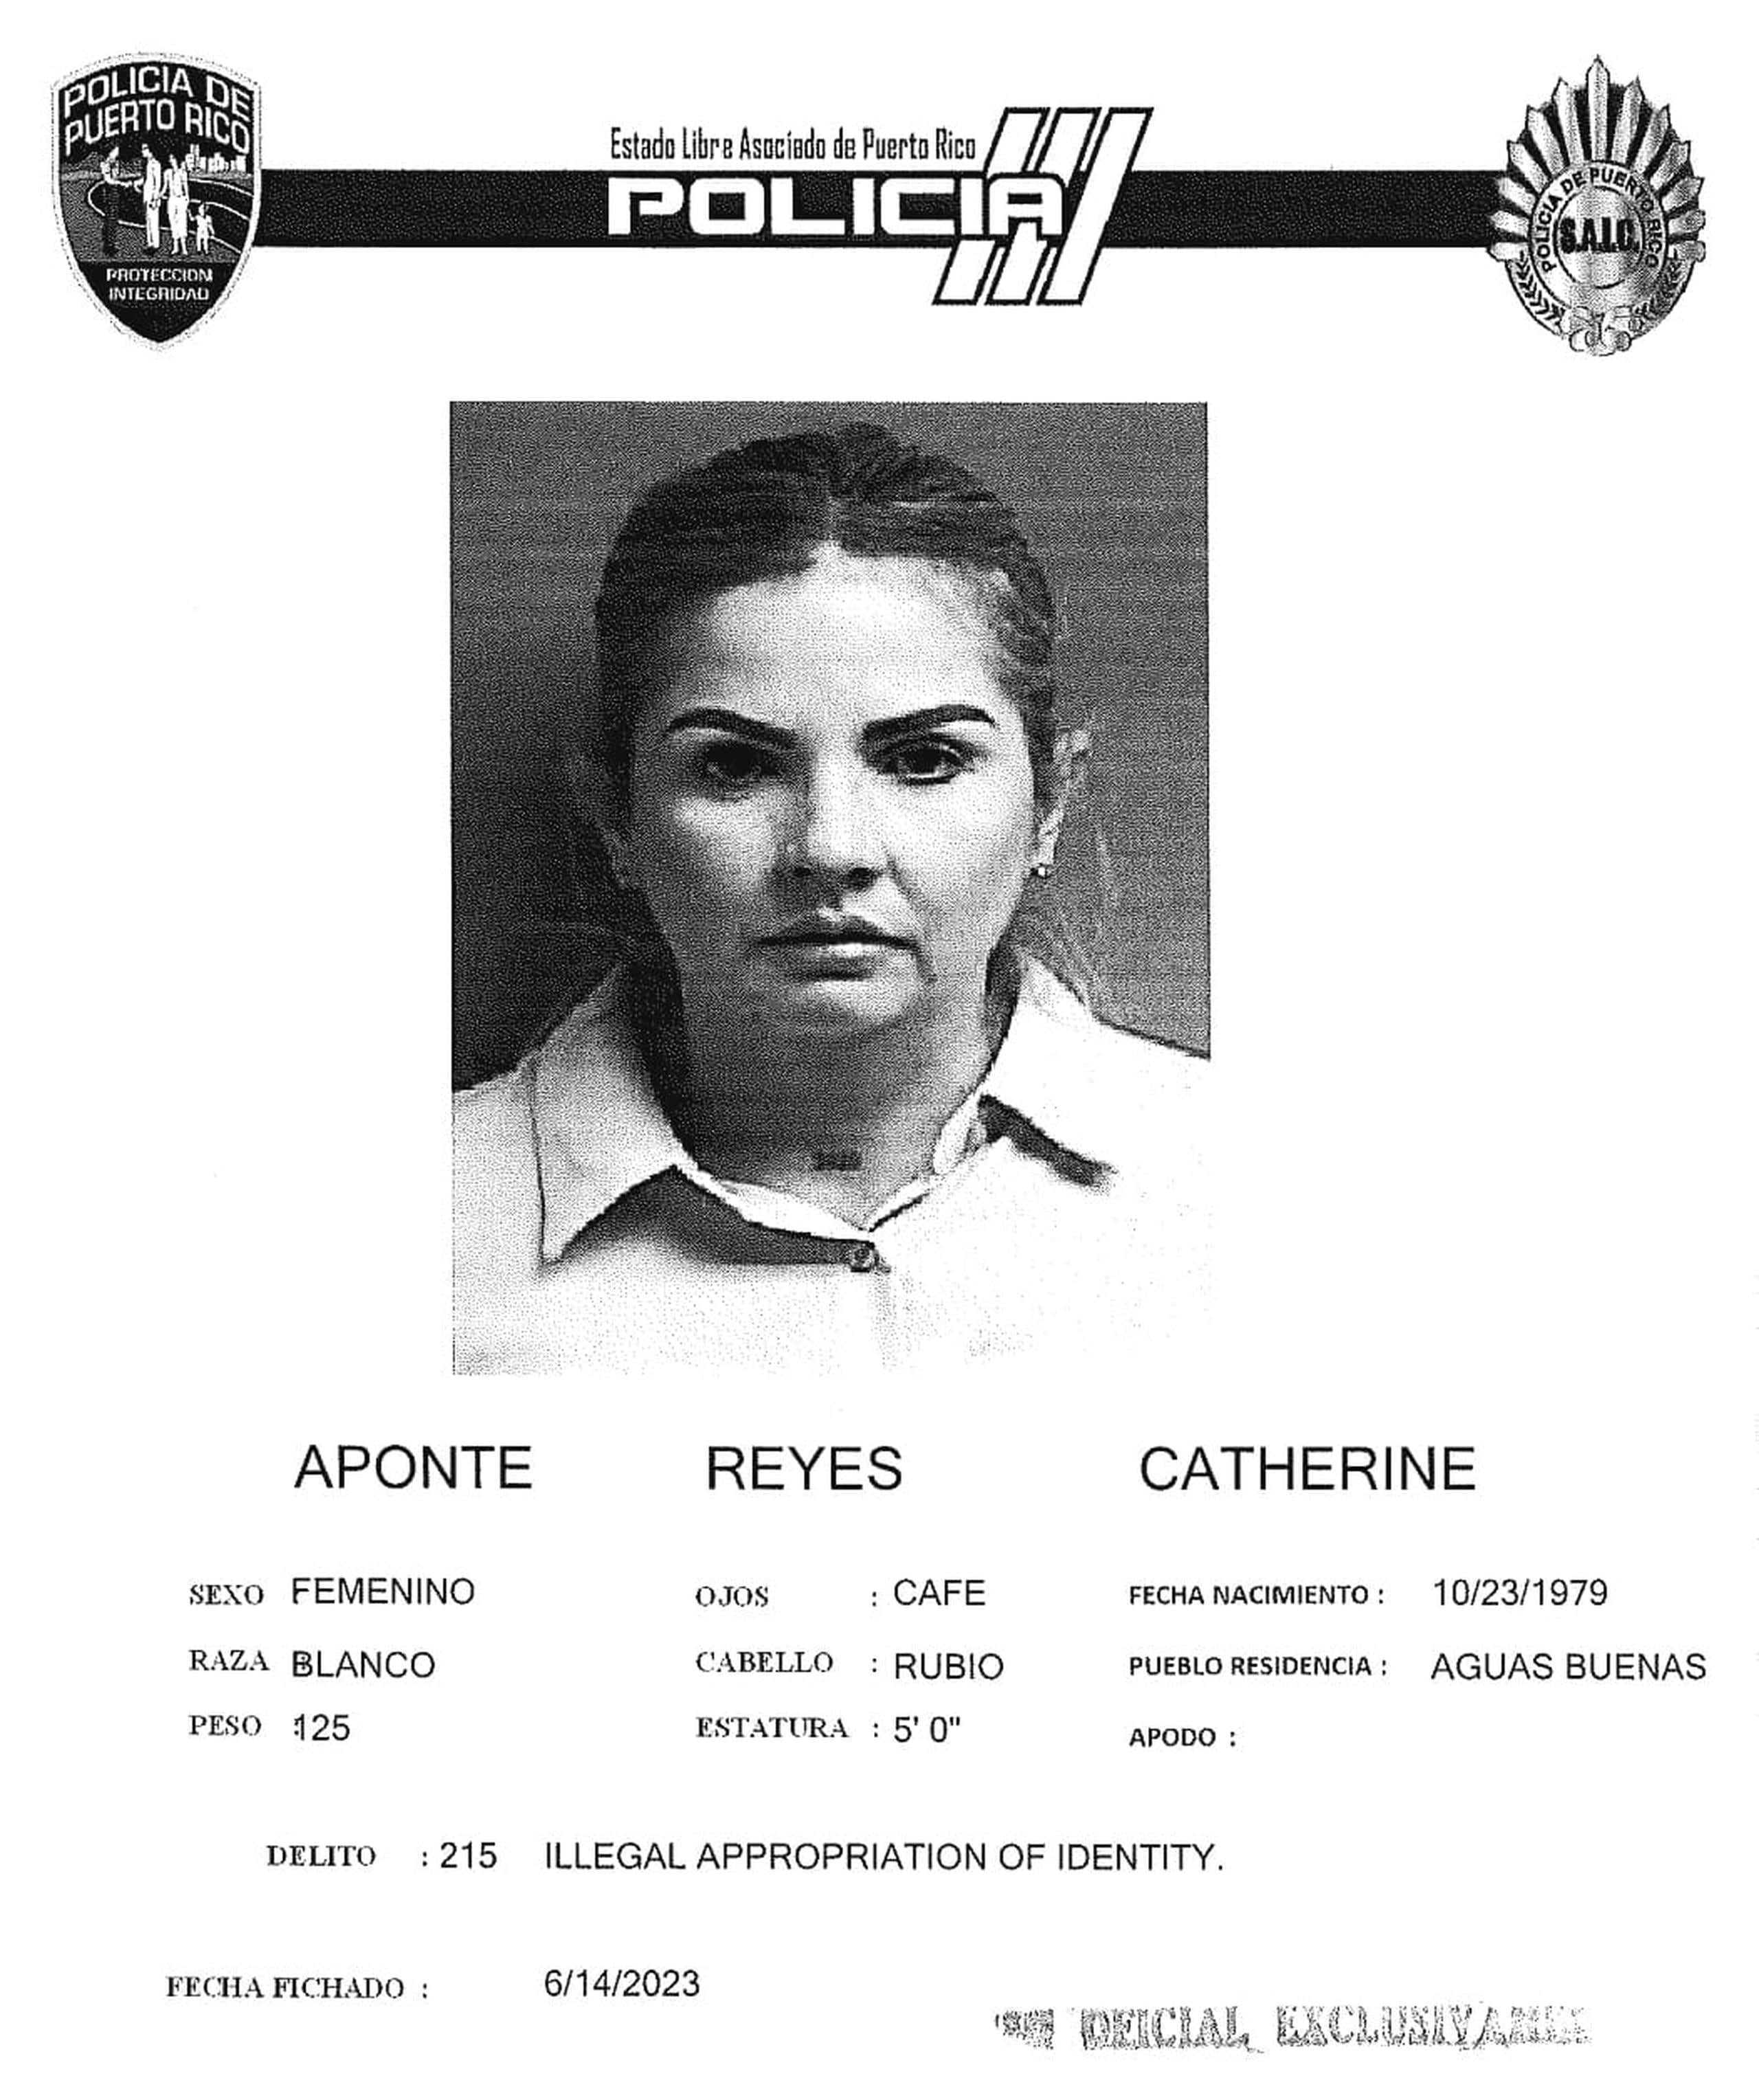 Catherine Aponte Reyes enfrenta cargos por fraude al PUA.